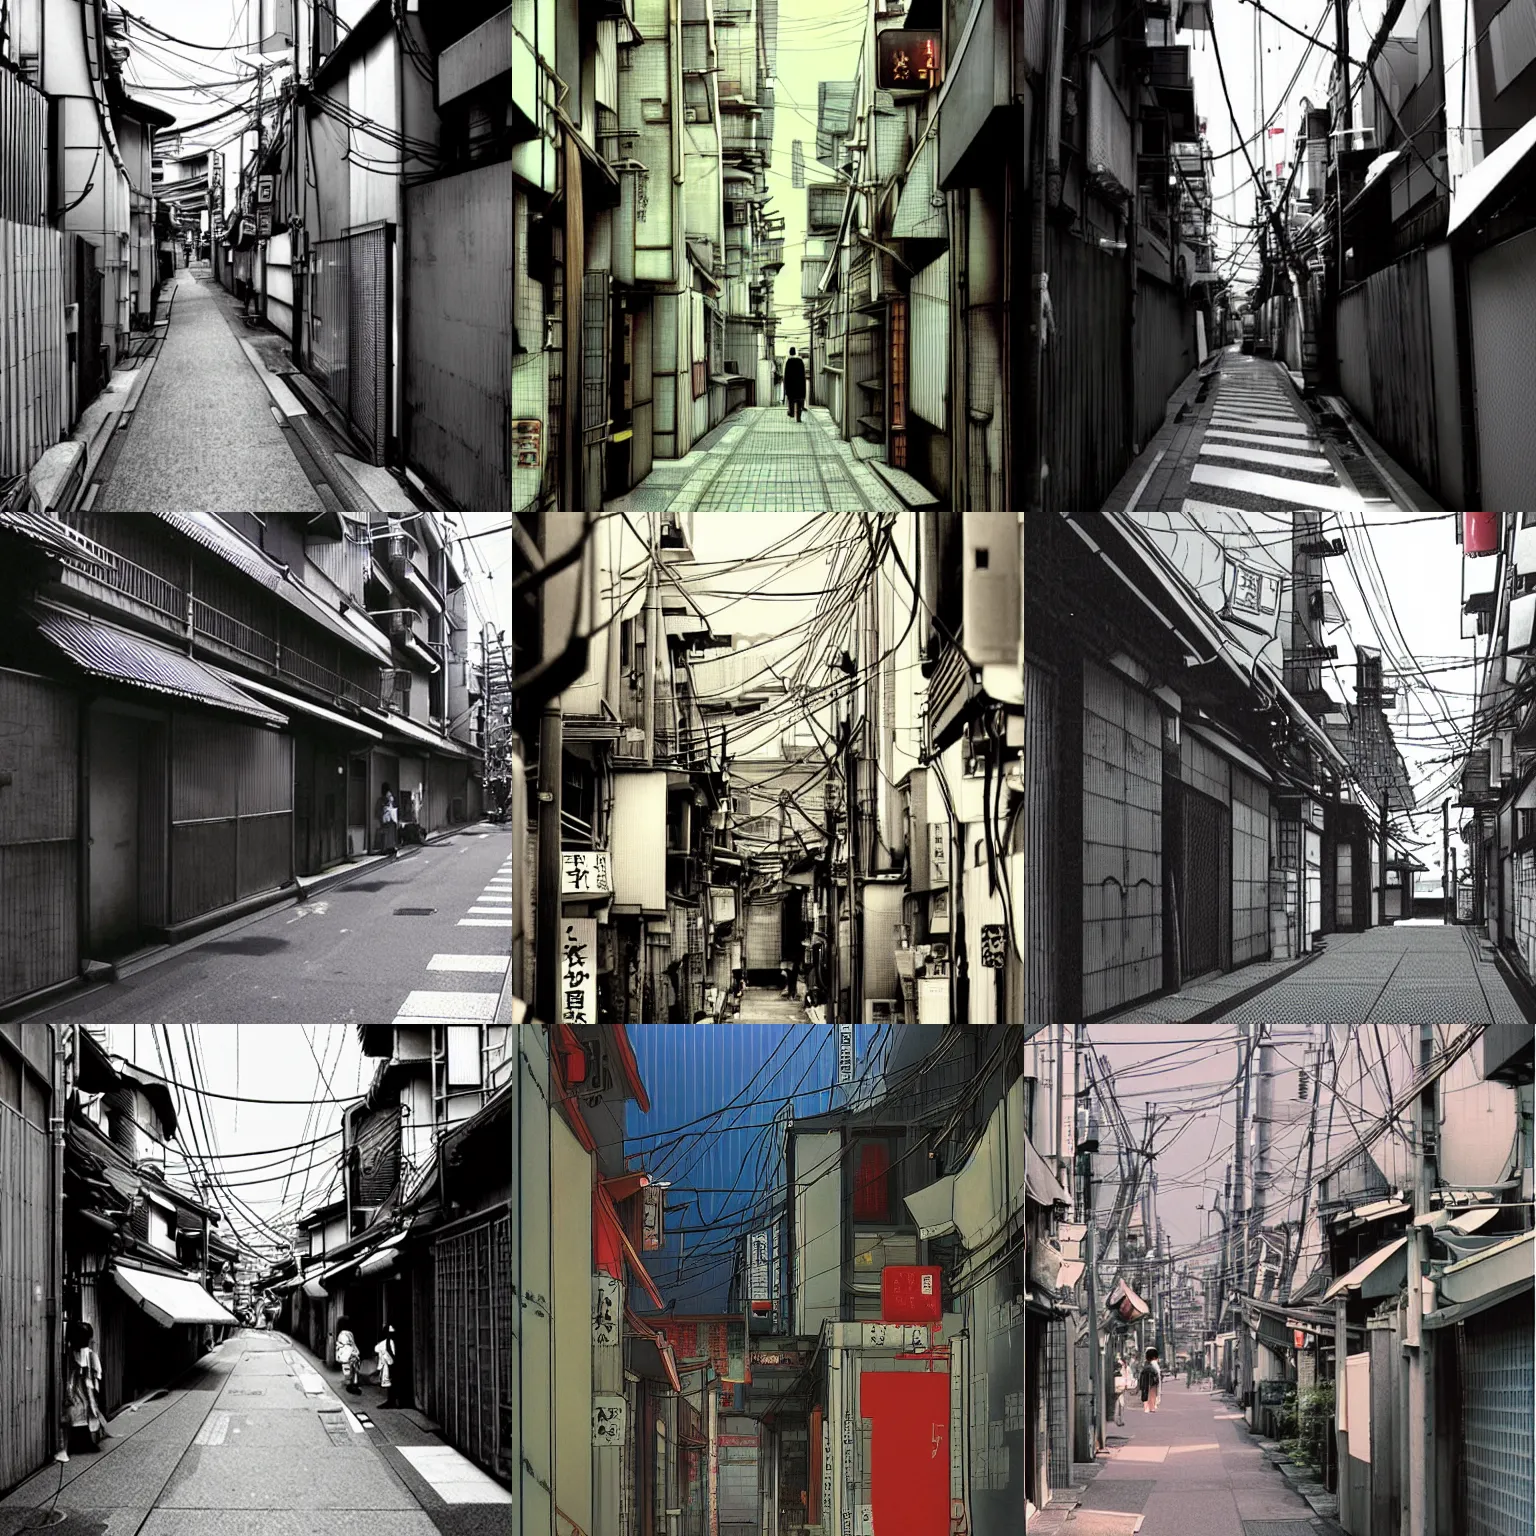 Prompt: tokyo alleyway by mamoru hosoda, beautiful